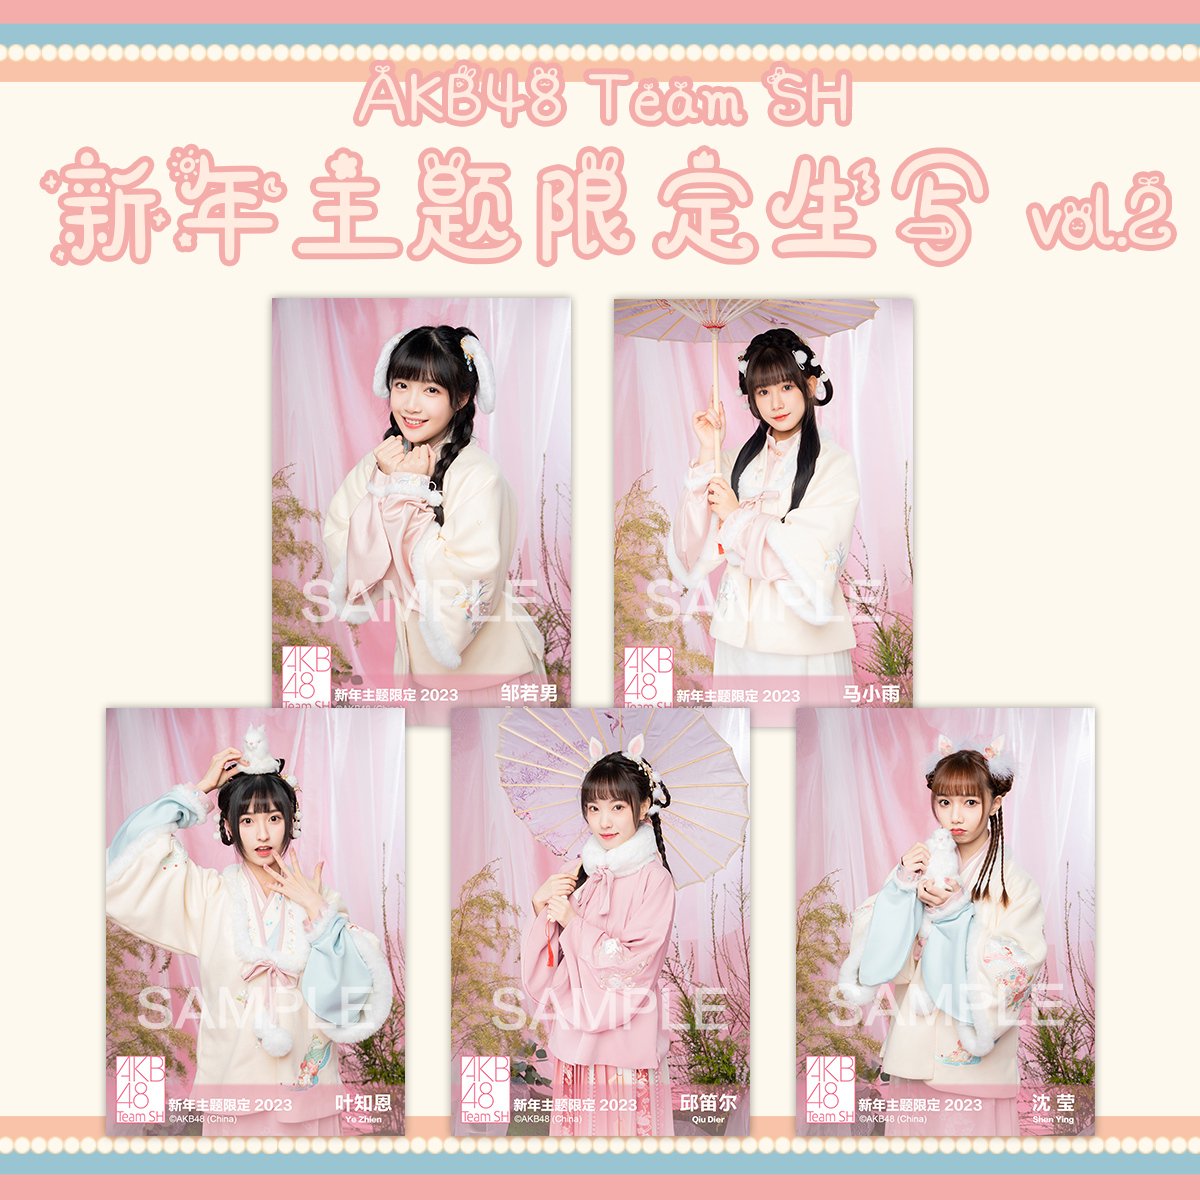 AKB48 Team SH 新年主题生写vol.2